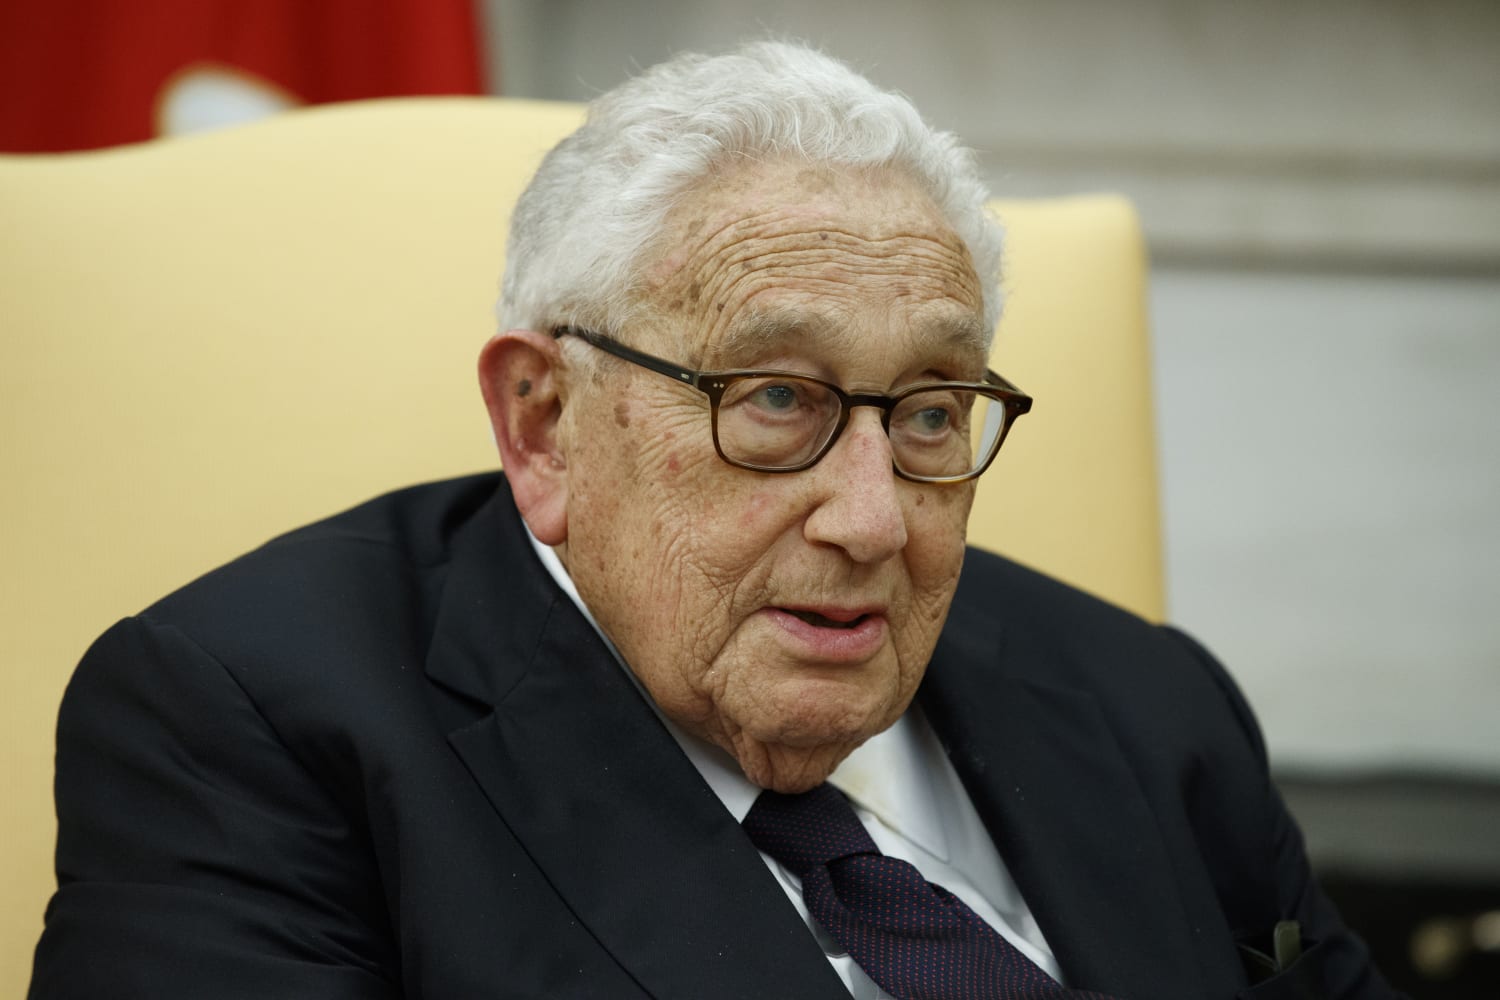 Henry Kissinger, exdiplomático estadounidense, cumple 100 años